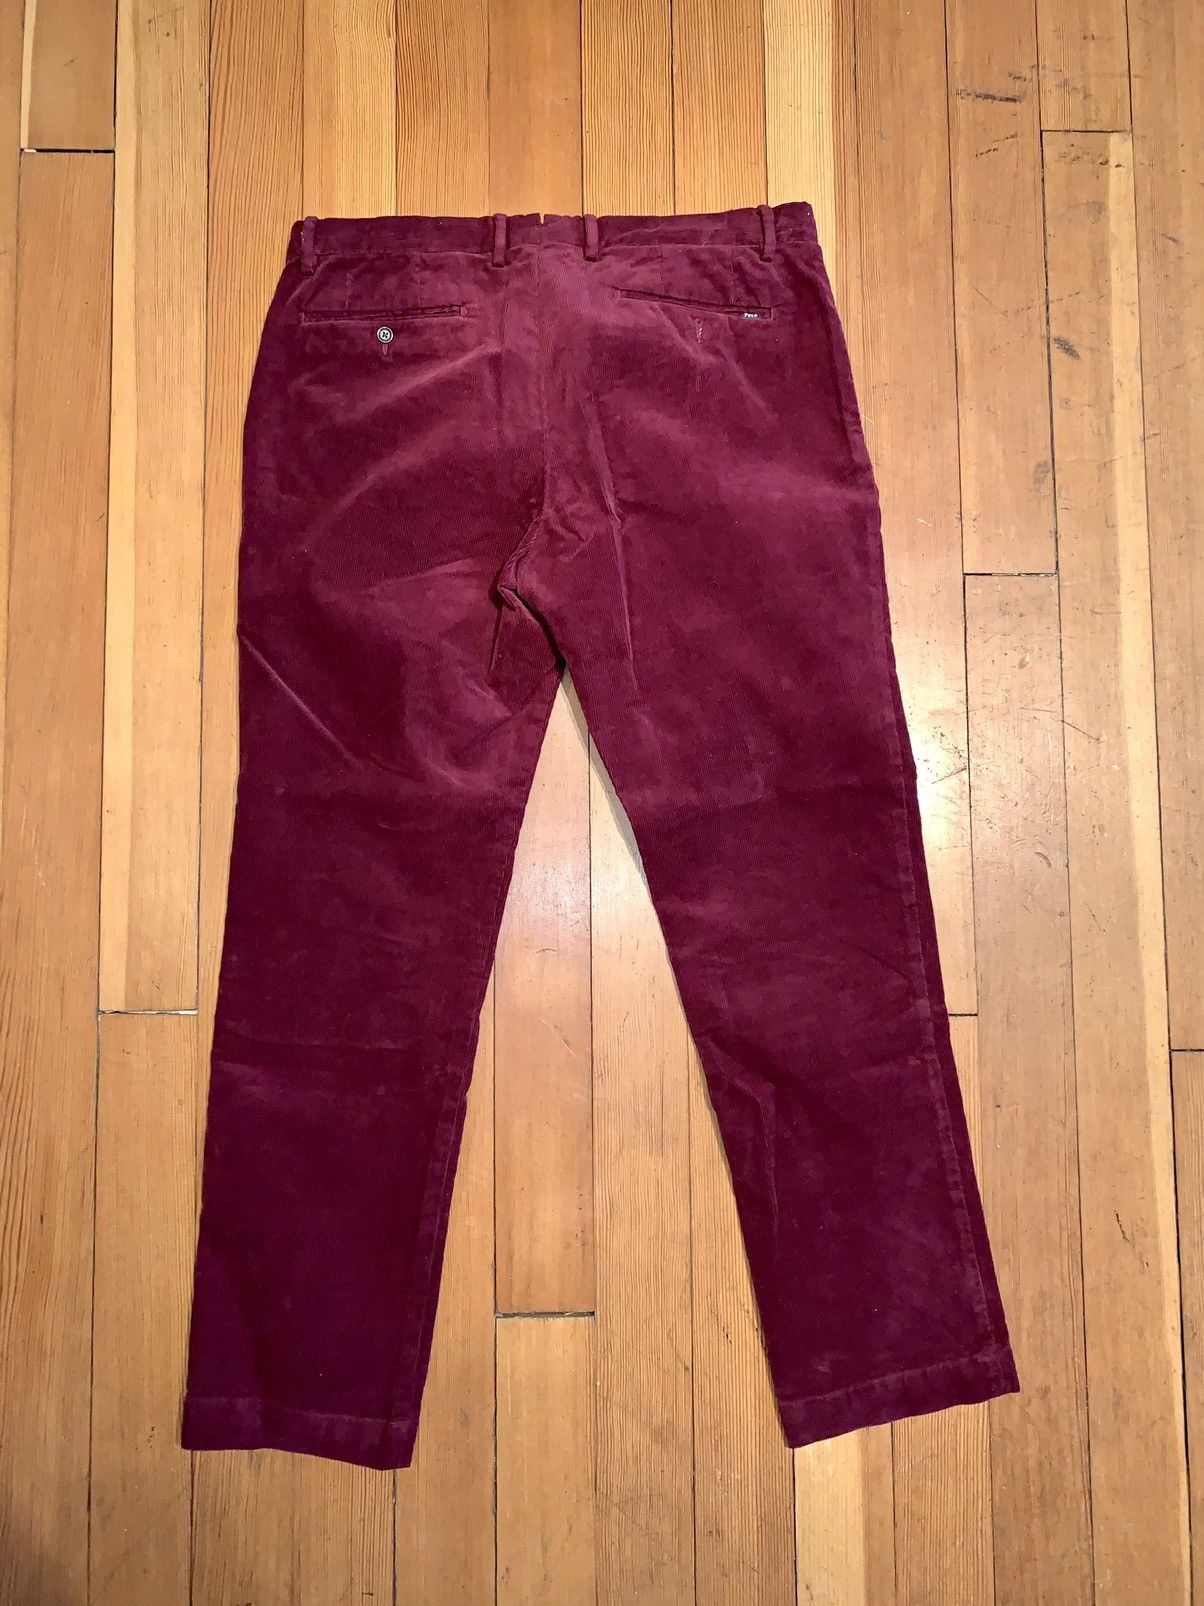 Ralph Lauren Red Ralph Lauren Corduroy Trousers Size US 36 / EU 52 - 2 Preview